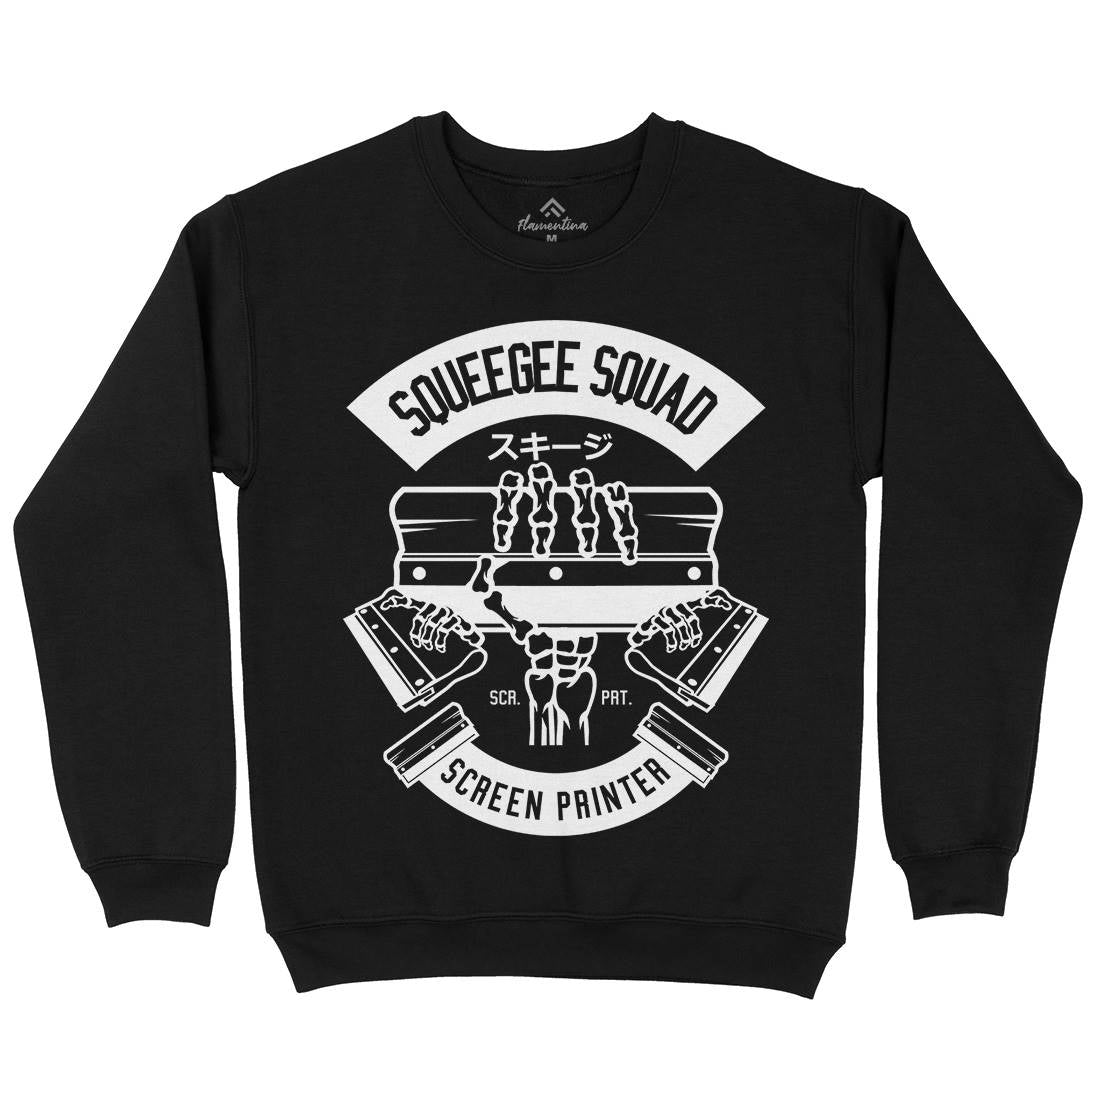 Squeegee Squad Mens Crew Neck Sweatshirt Retro B642